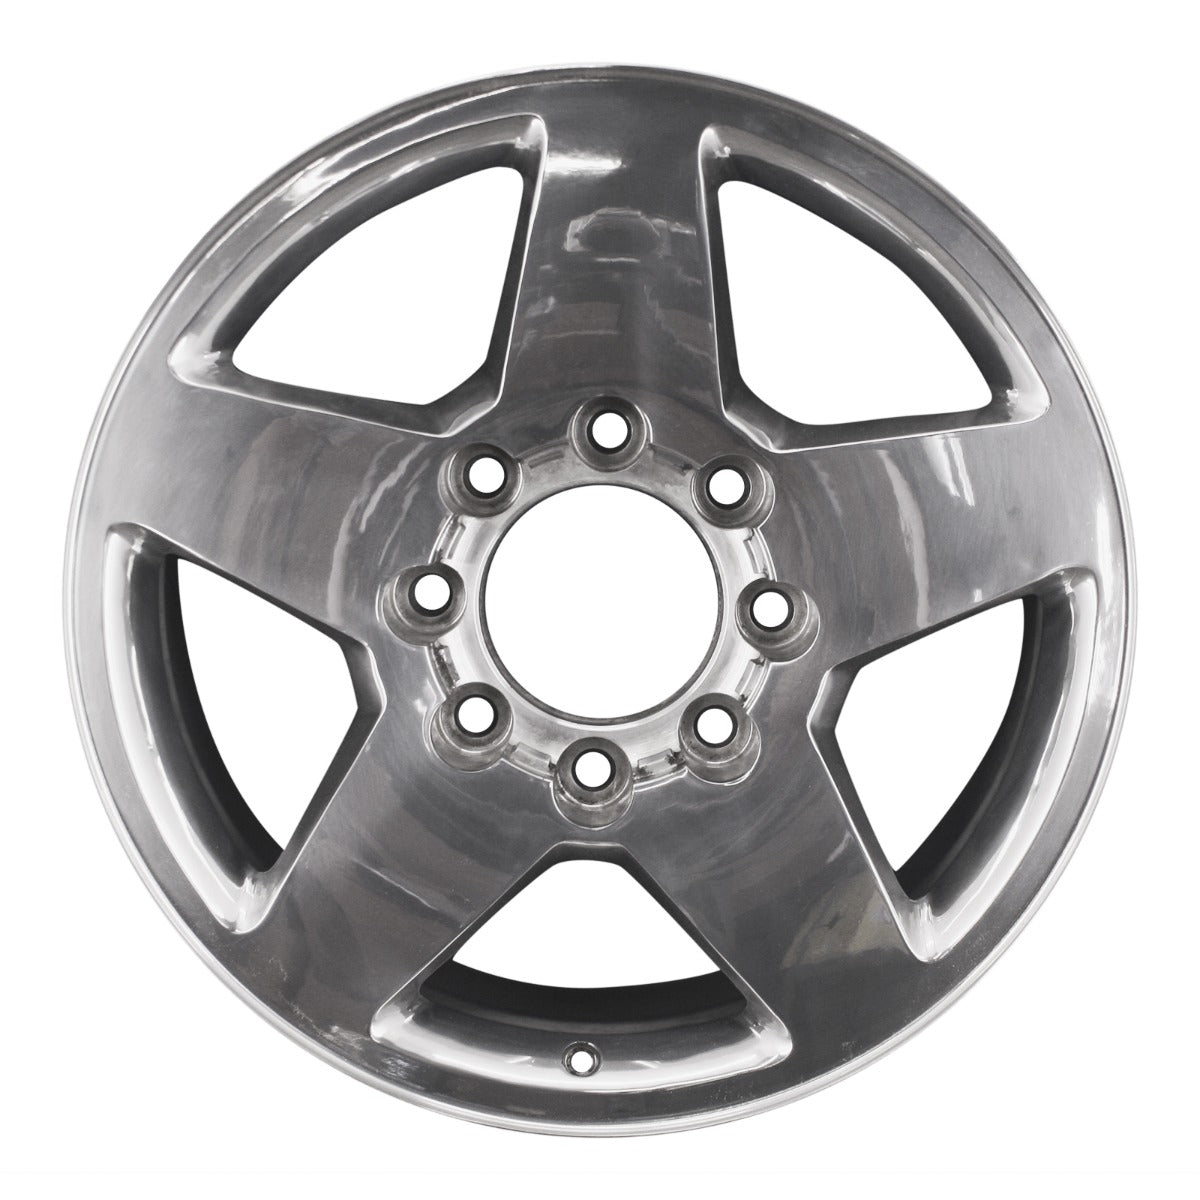 2015 GMC Sierra 2500 New 20" Replacement Wheel Rim RW5503P